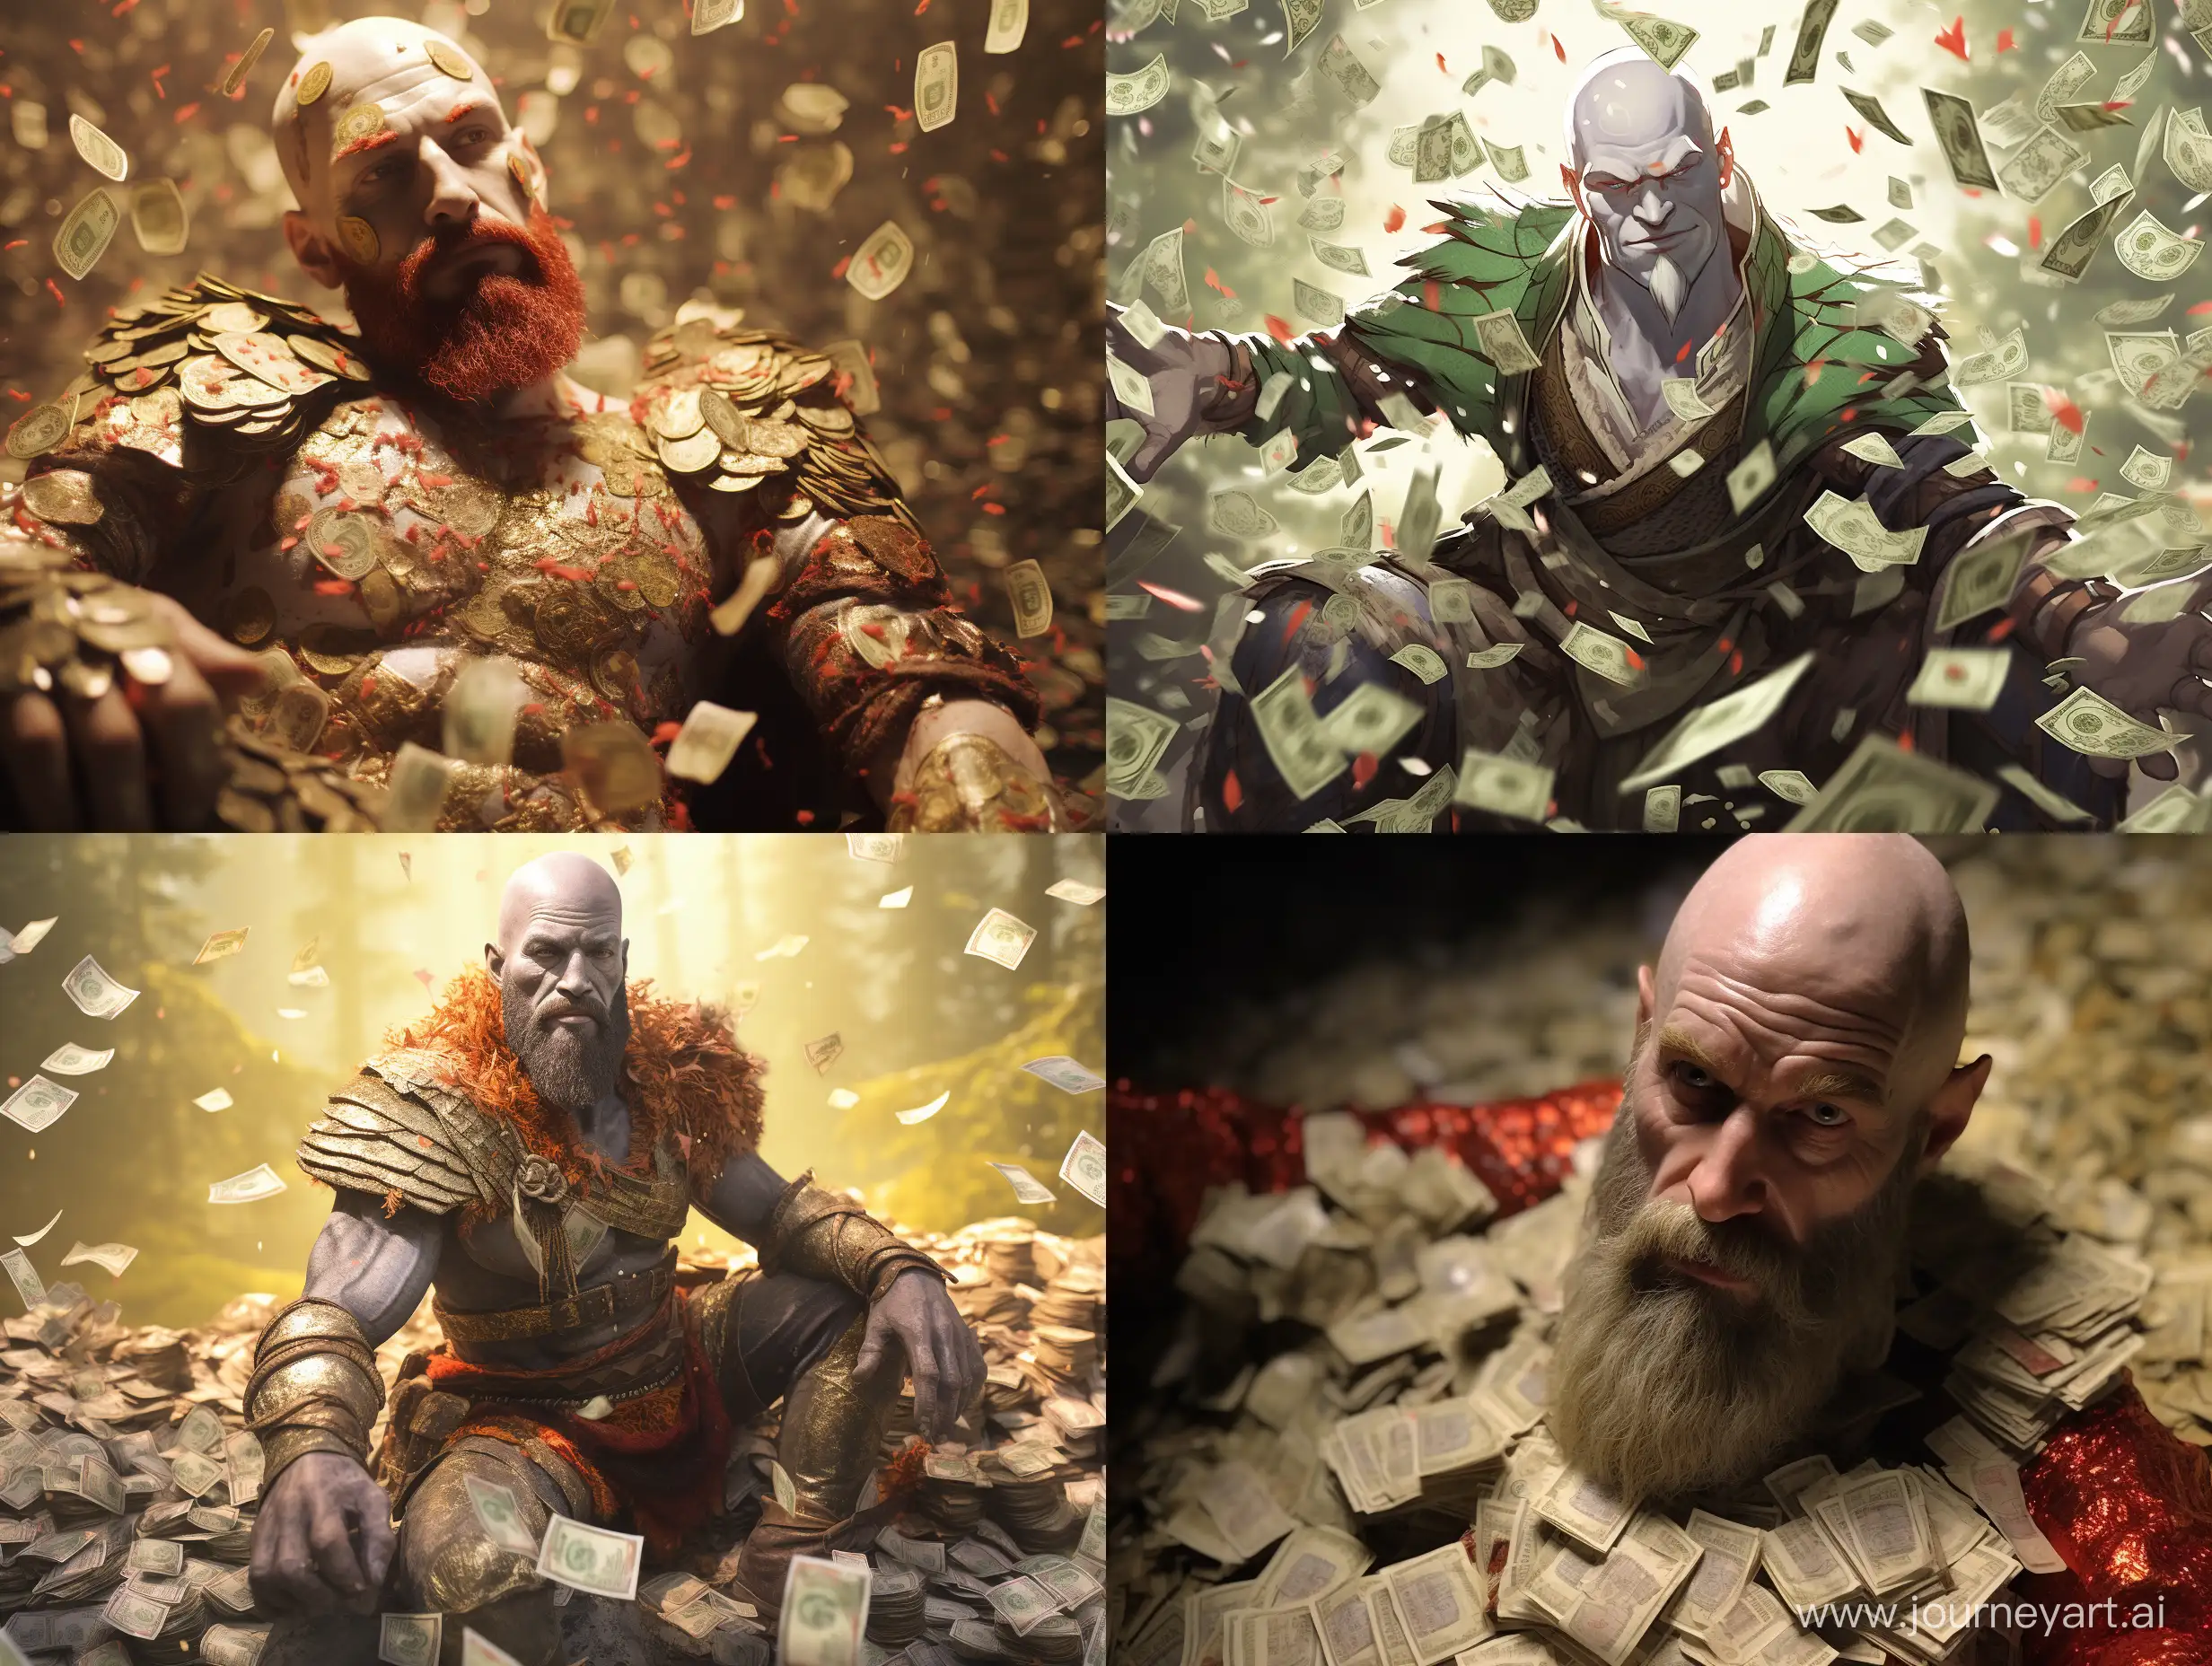 God of war character Kratos peeing on money